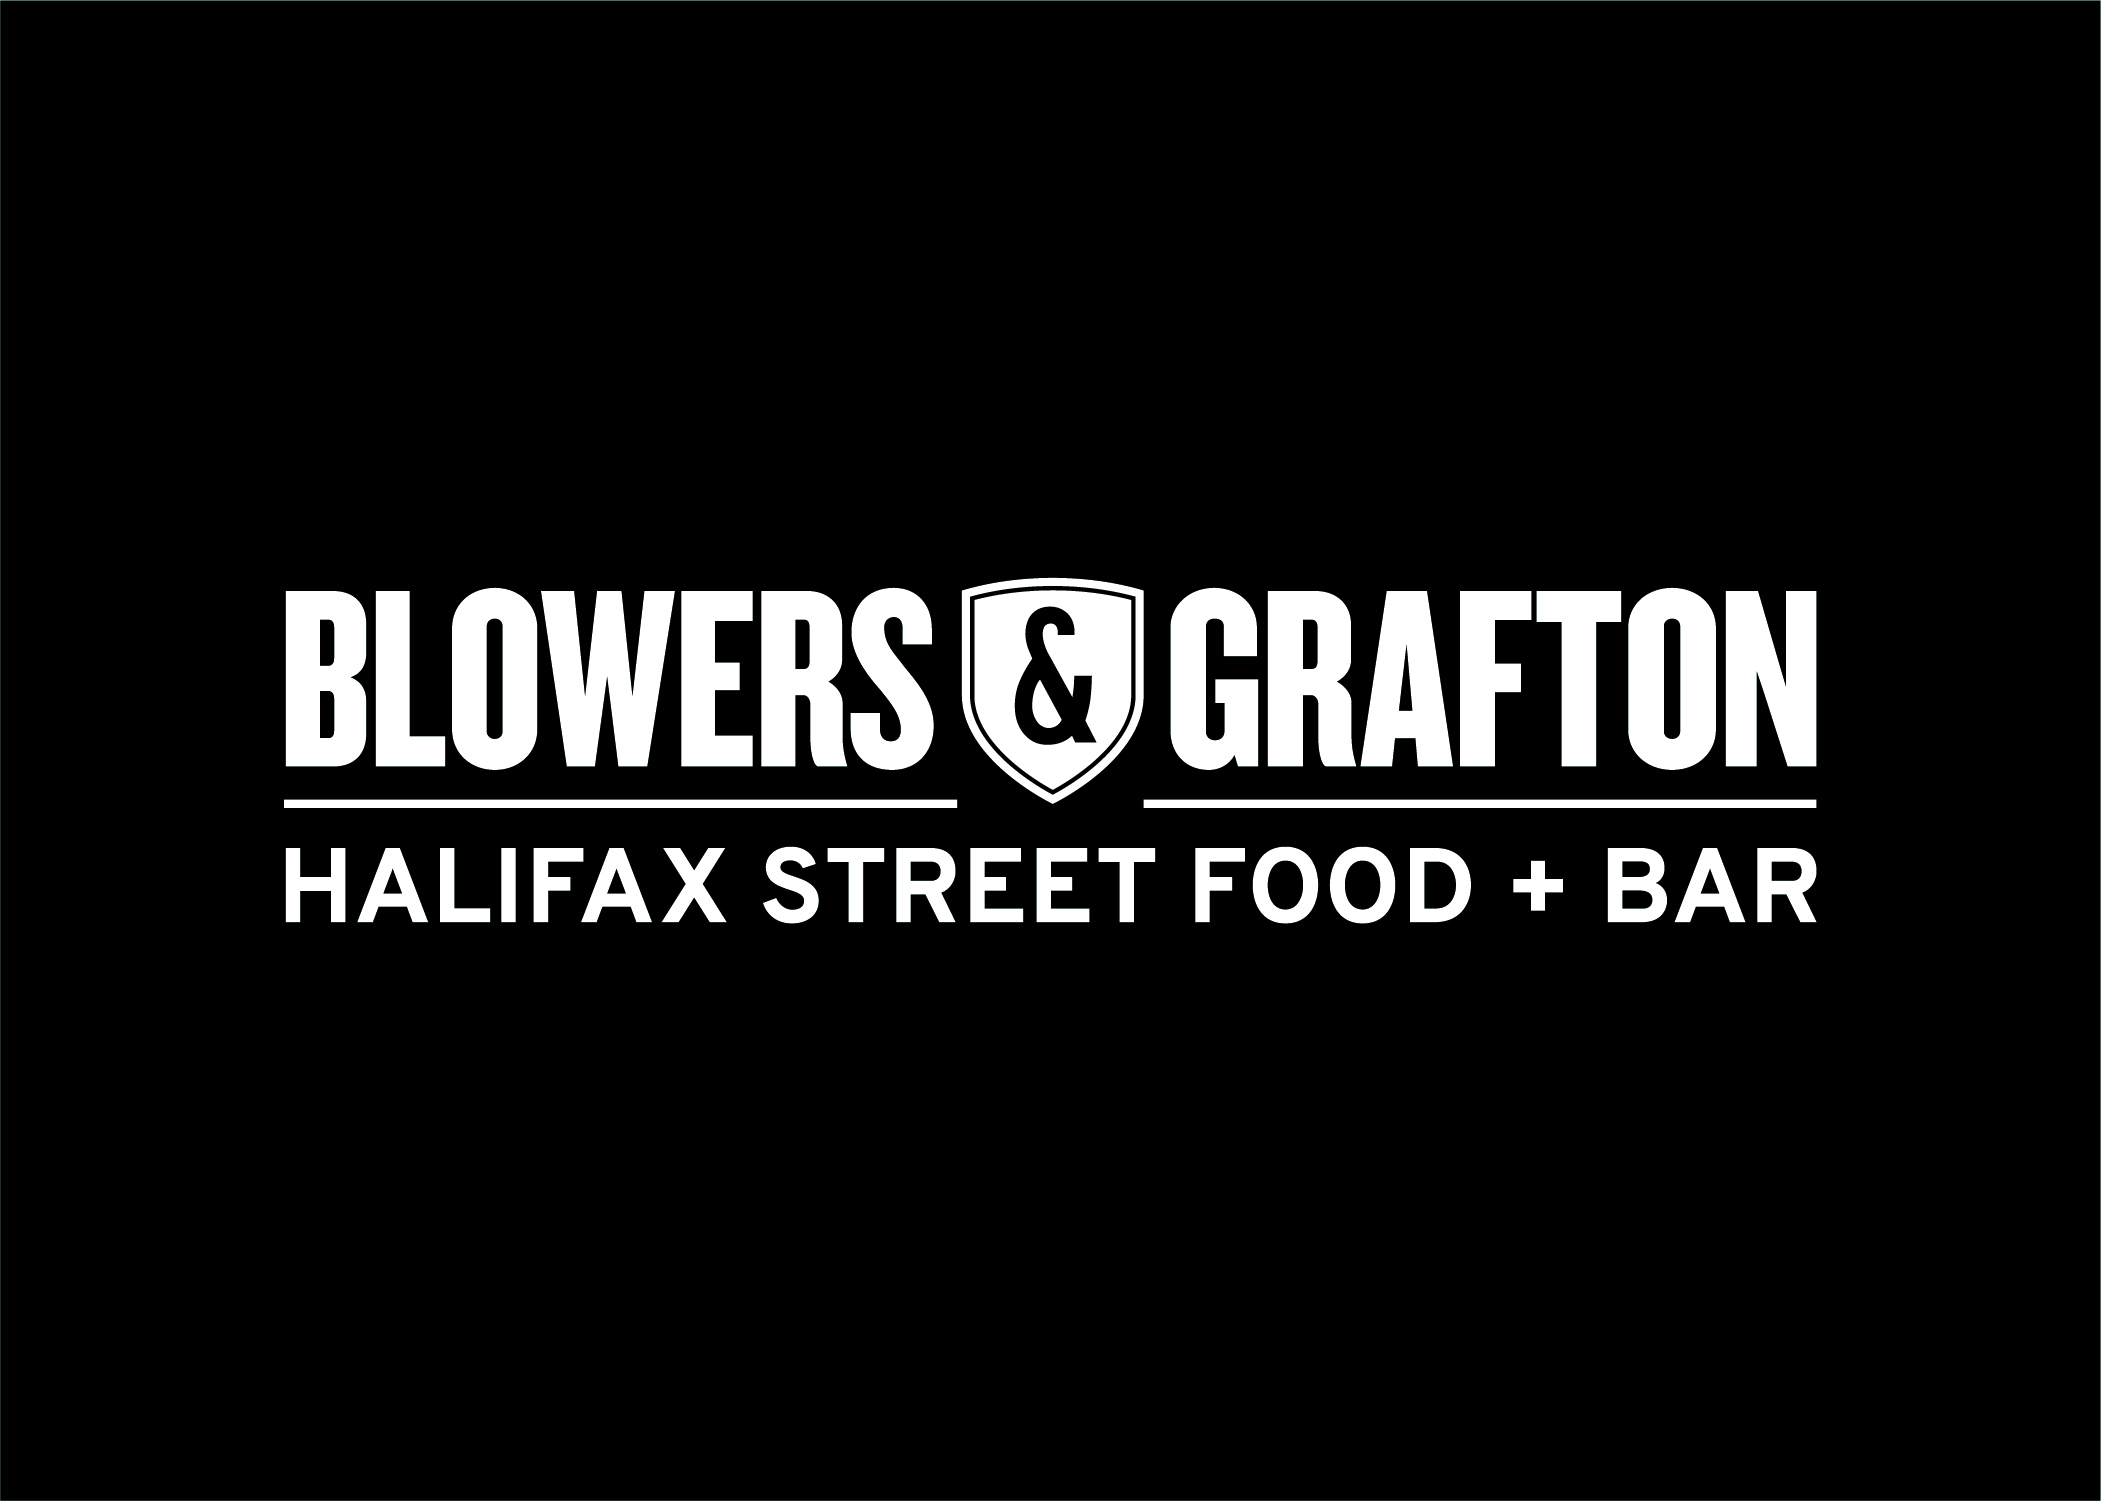 Blowers & Grafton logo